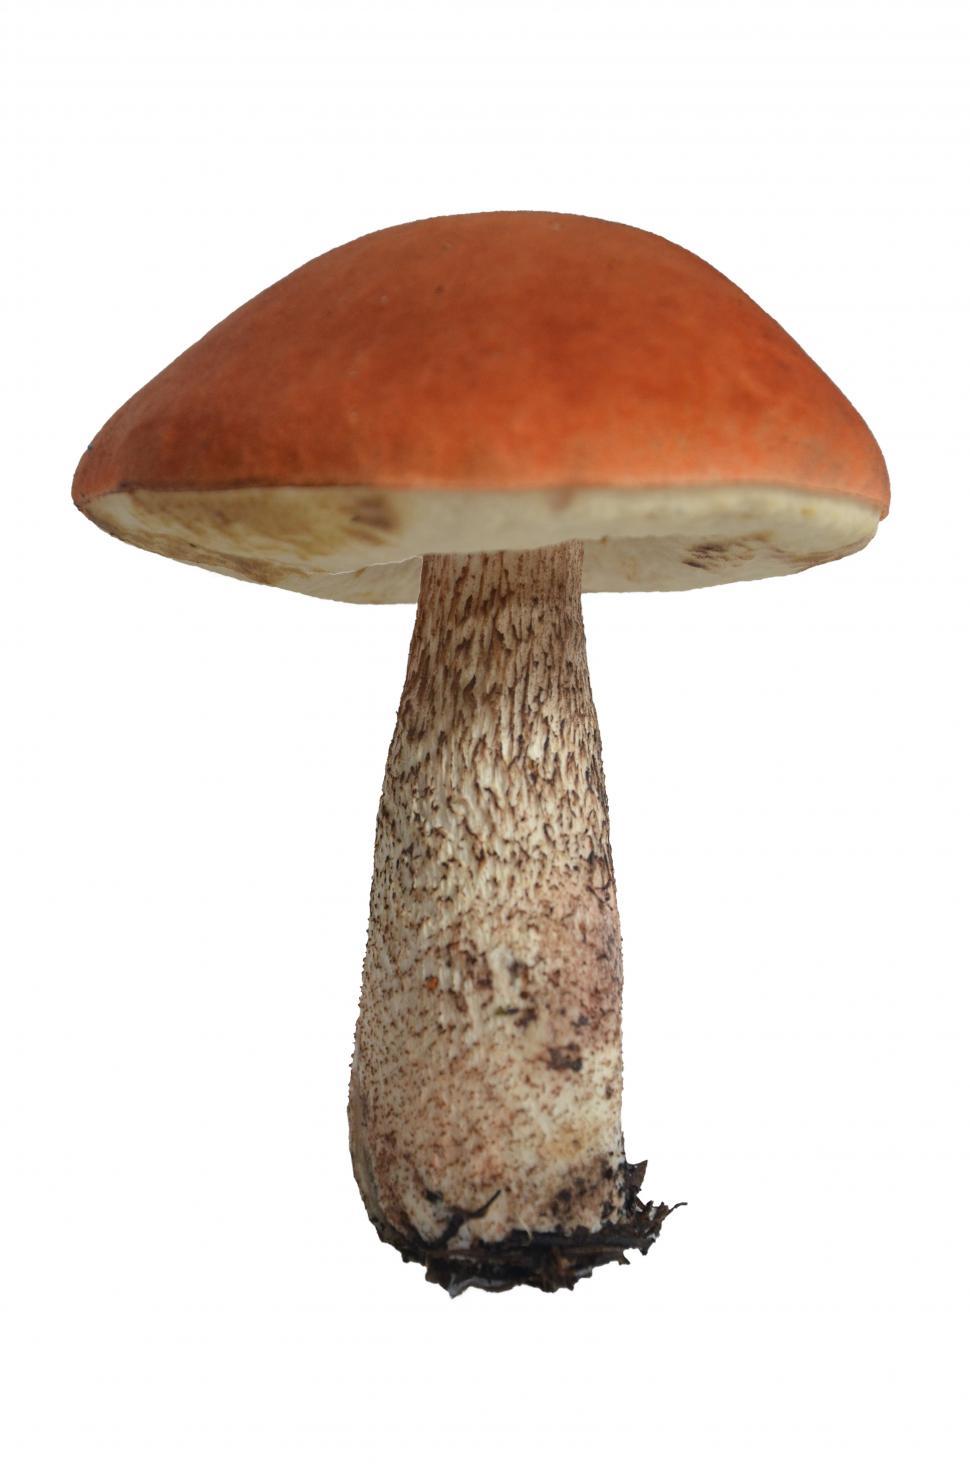 Dad Jokes - edible mushroom